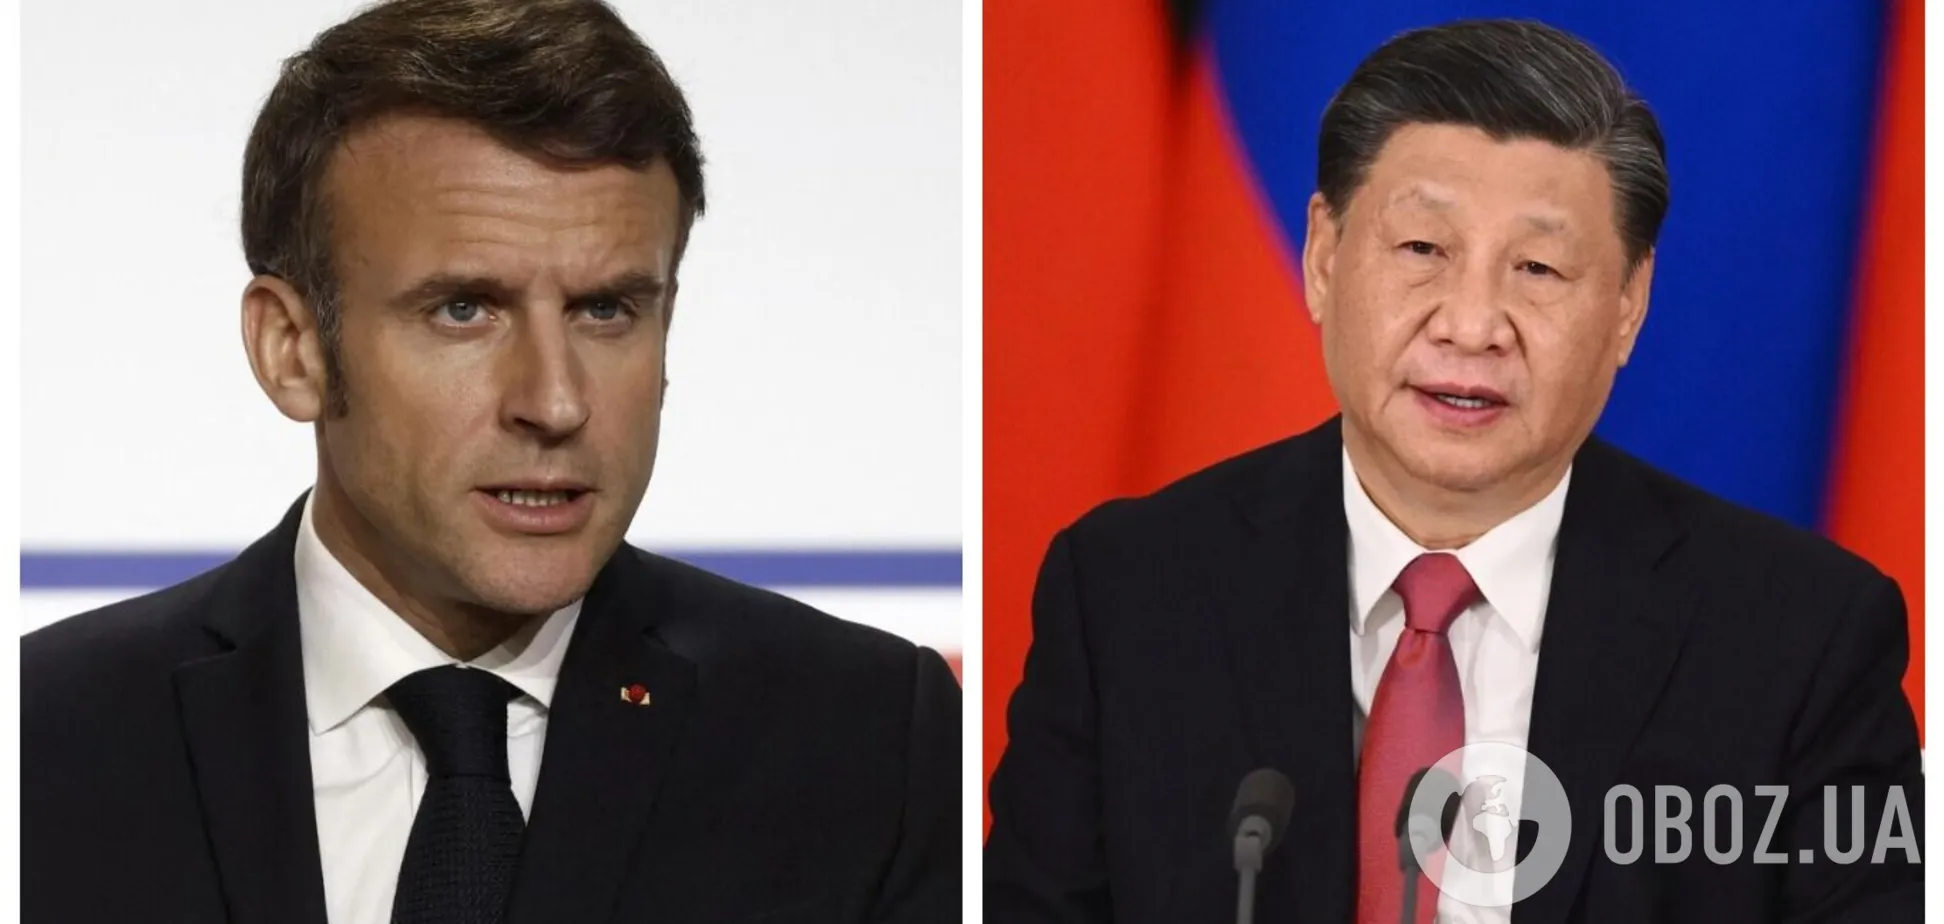 Президента Франции – в отличие от главы Еврокомиссии – в Китае хотя бы заметили